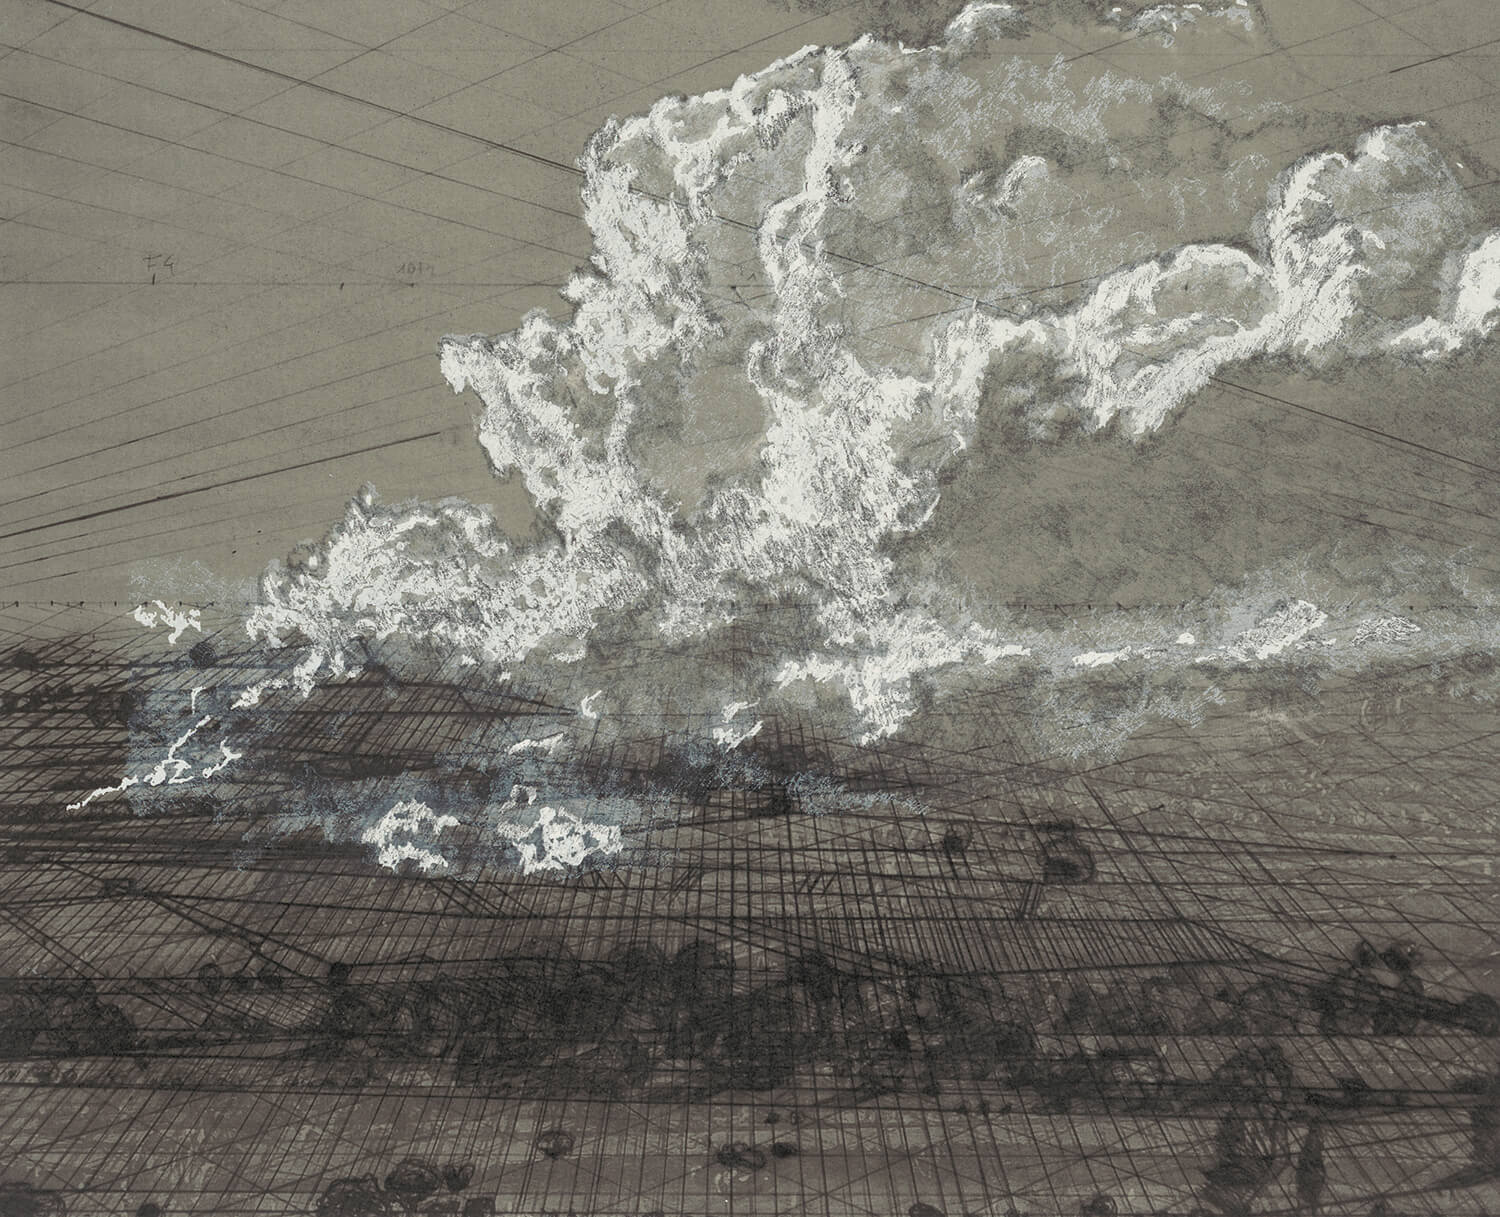 Heike Negenborn, Weiße Wolke Nr. 12, 2021, Chine Collé auf Büttenpapier, gerahmt, Unikatsgrafik, 50 x 60 cm